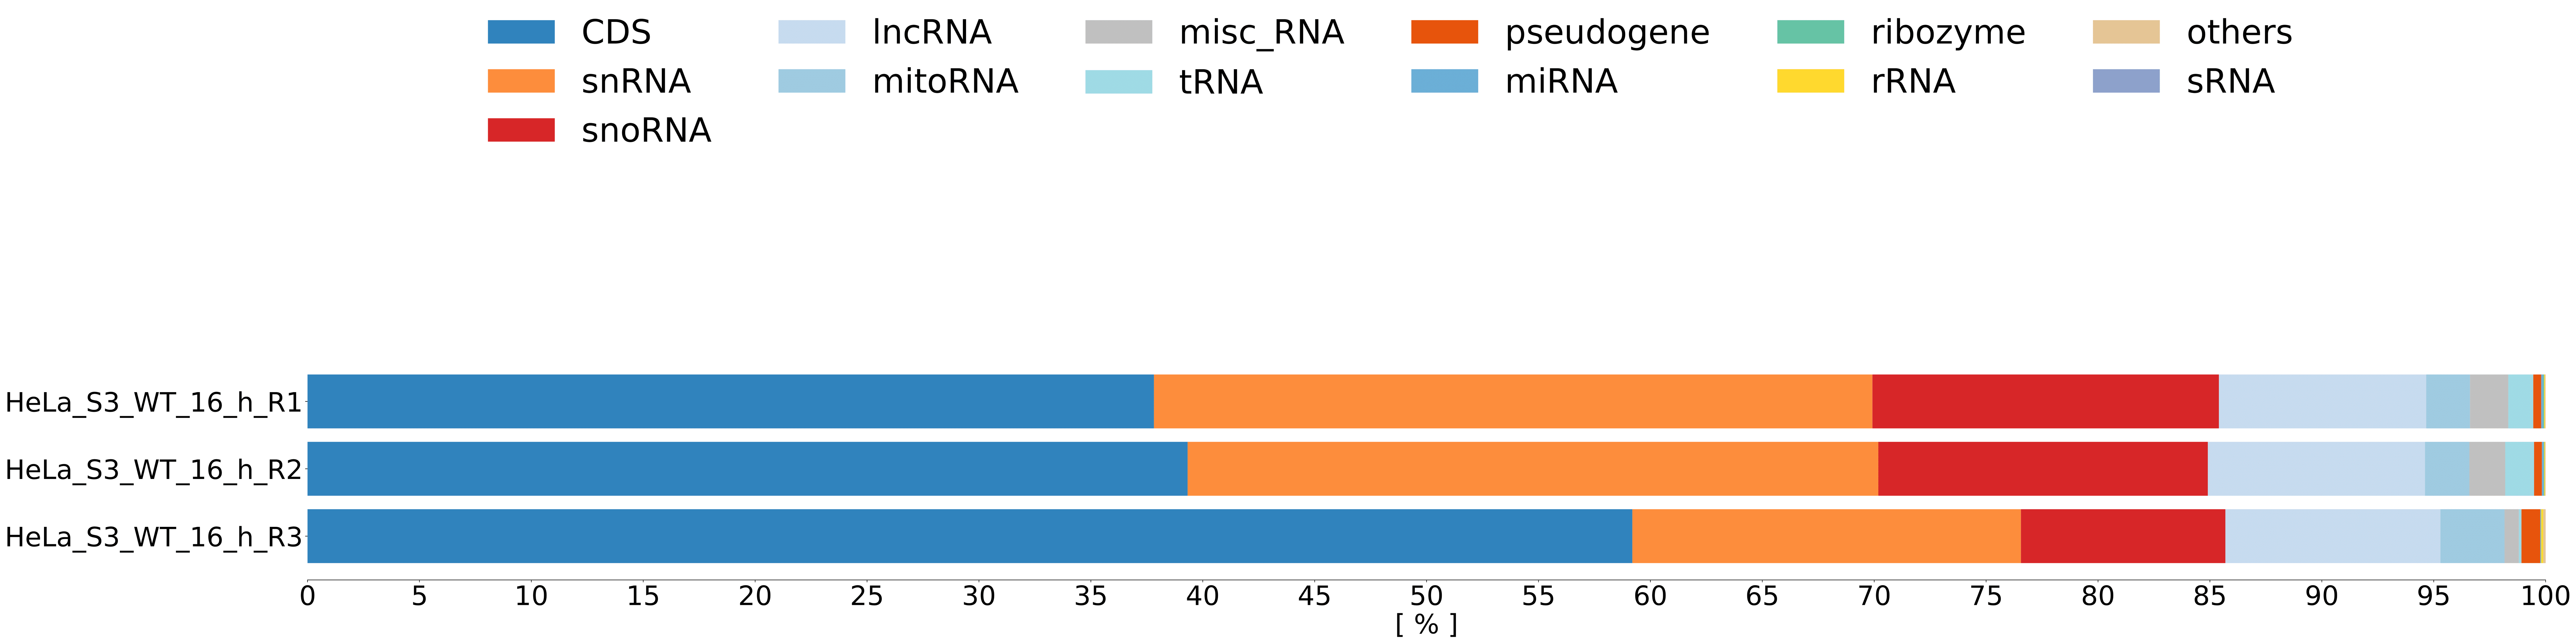 RNA_class_stats_combined_host